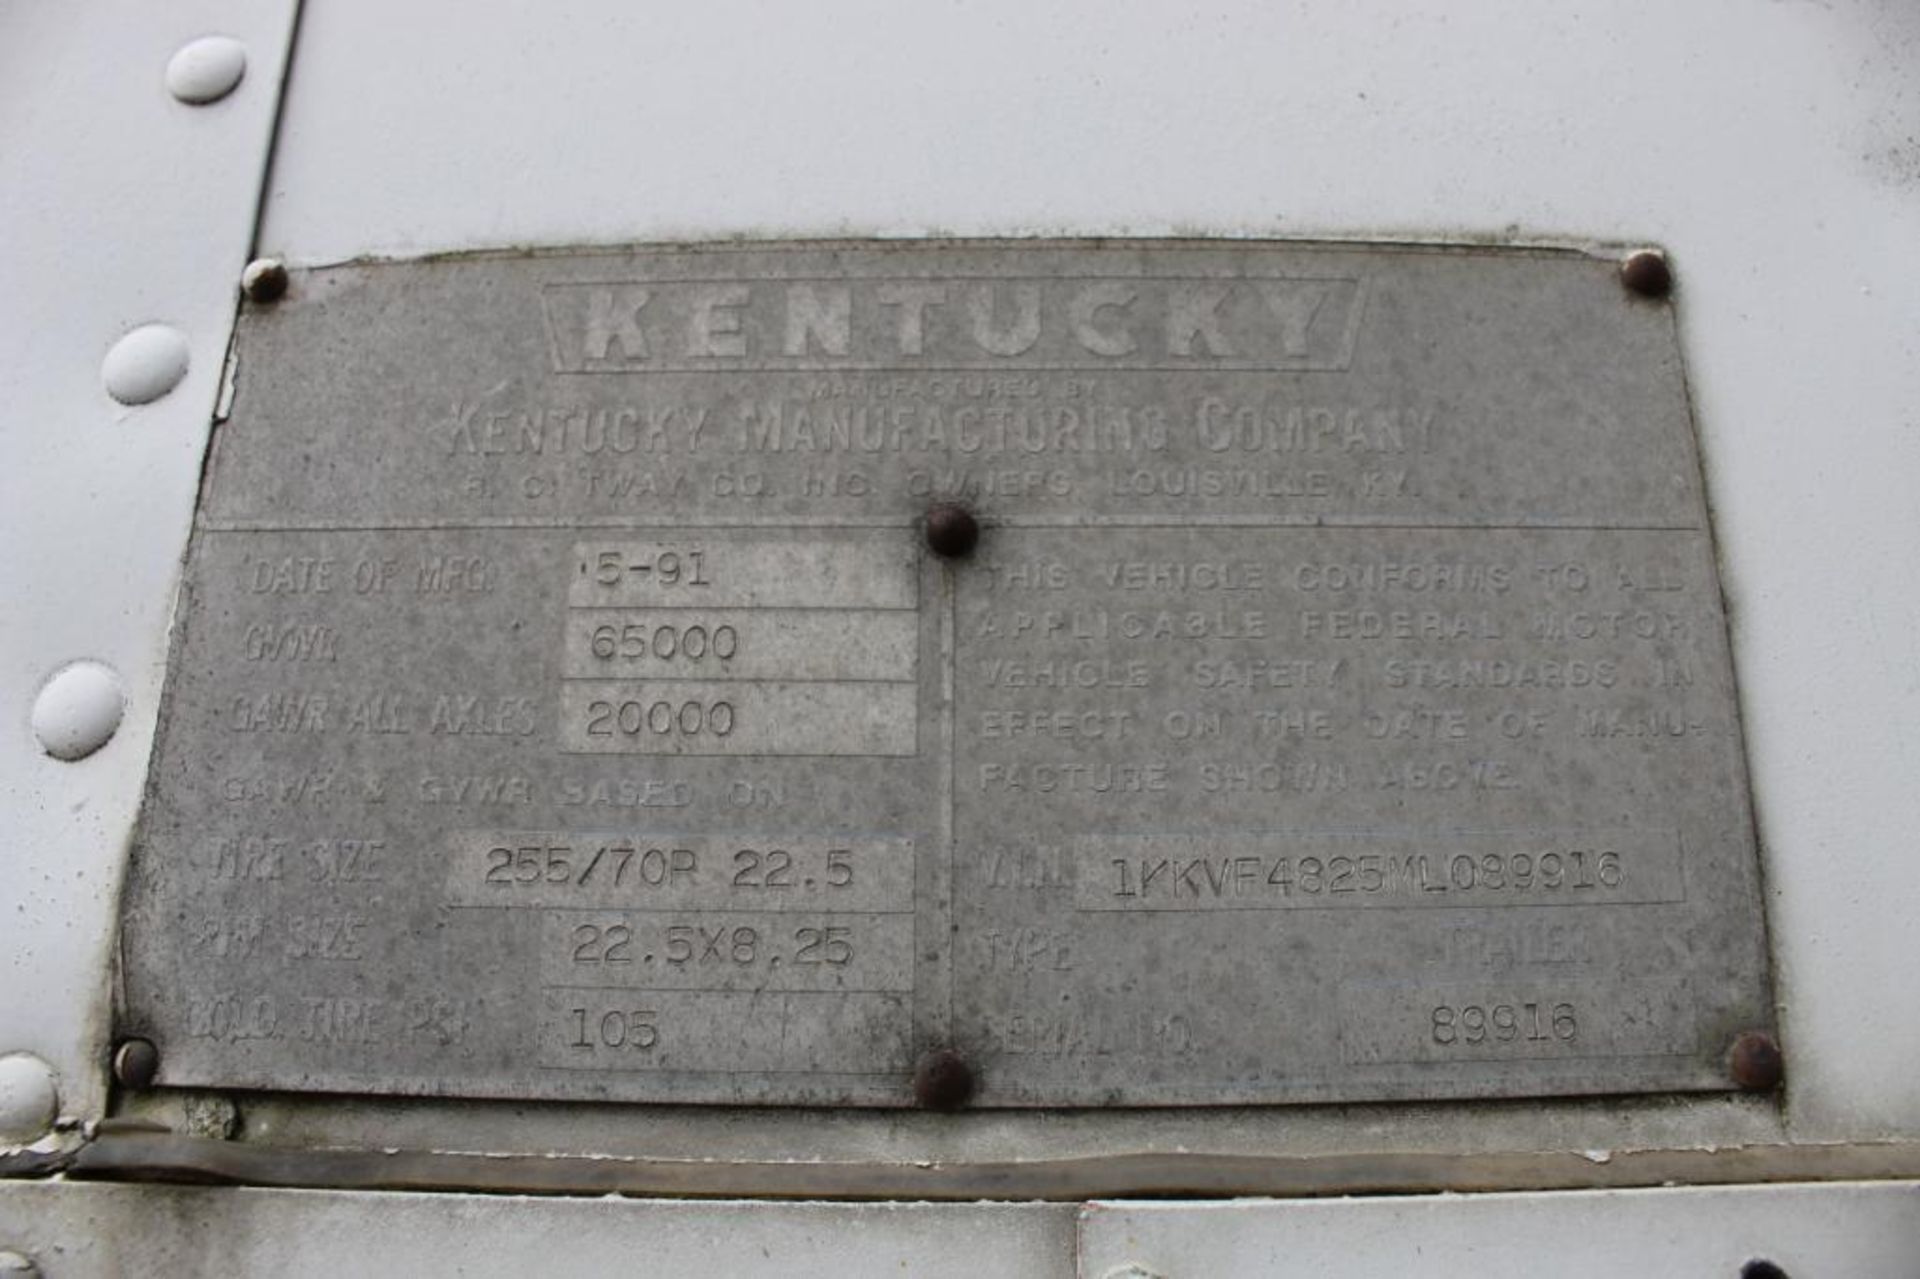 1991 Kentucky 47 ft. Tandem-Axle Furniture Van Trailer, VIN 1KKVF4825ML089916, Swing Rear & (4) Swin - Image 4 of 4